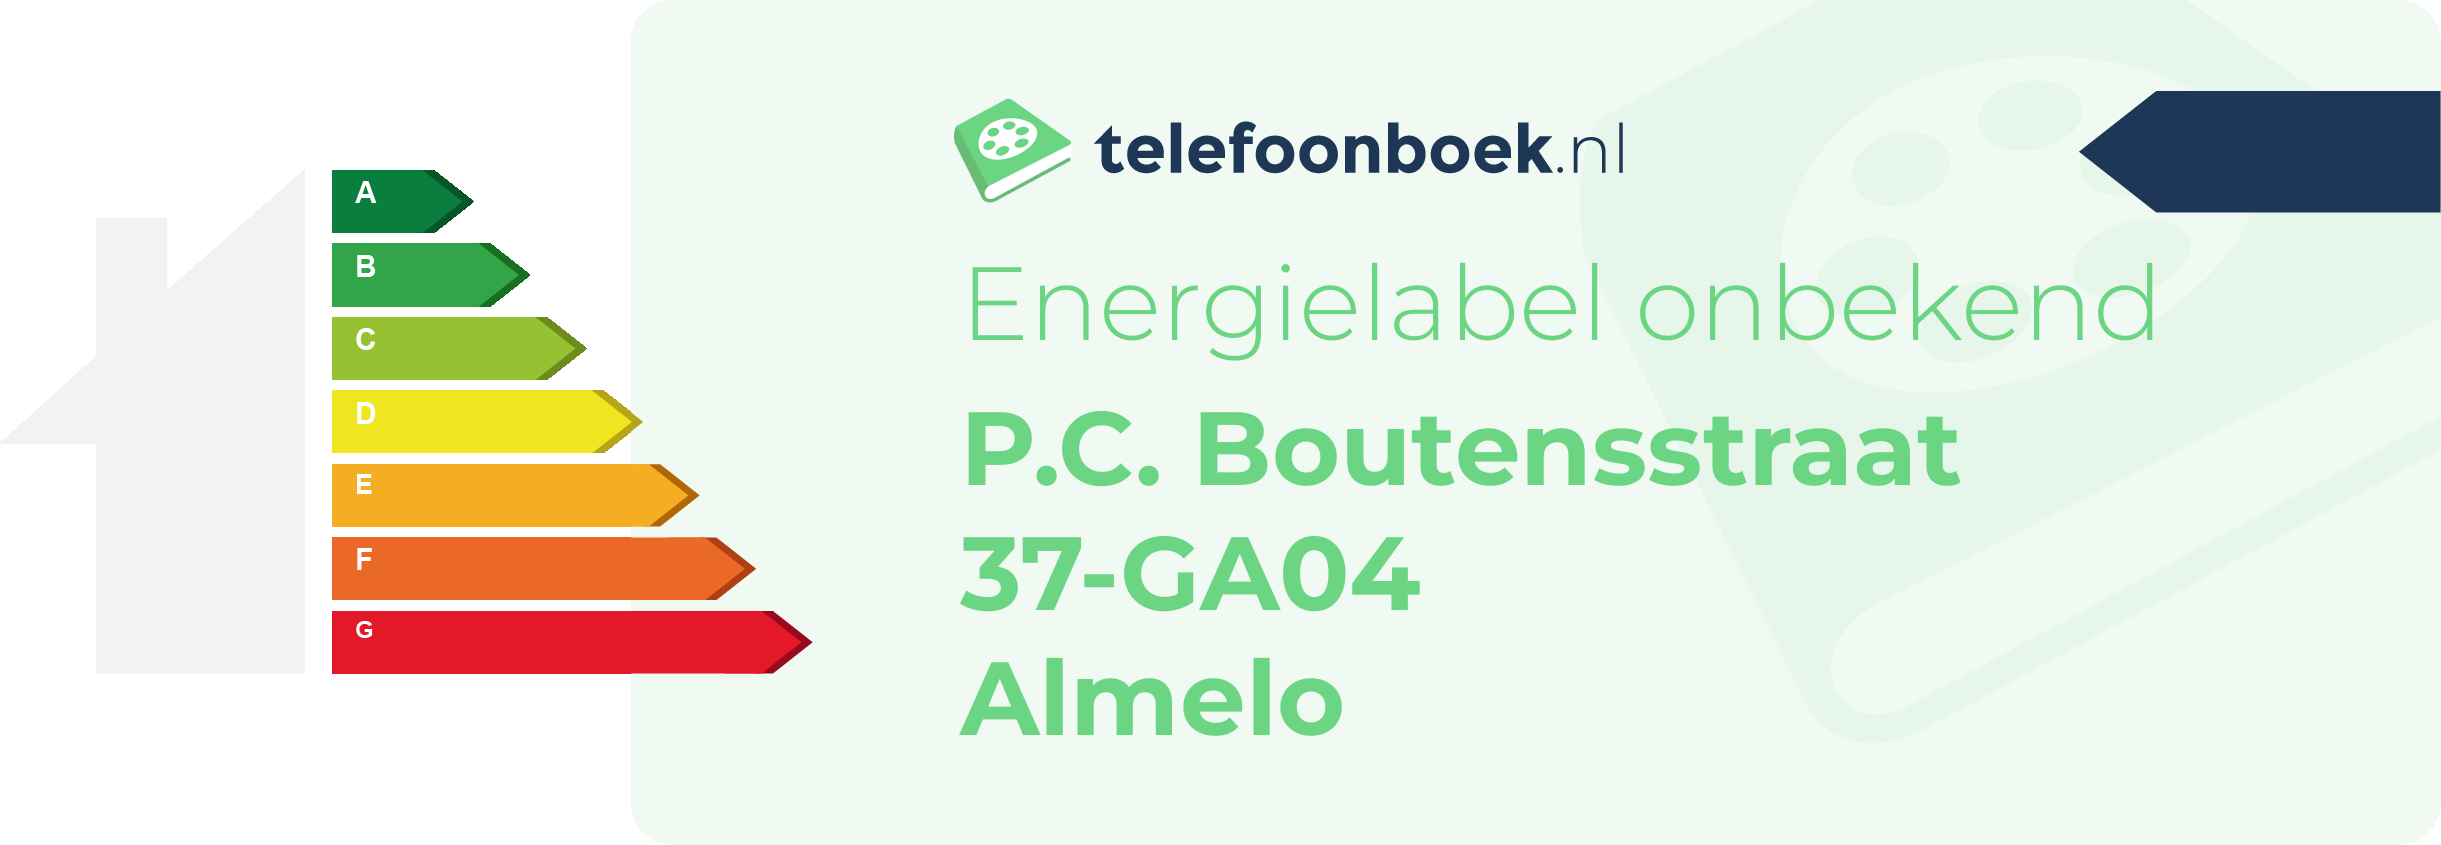 Energielabel P.C. Boutensstraat 37-GA04 Almelo